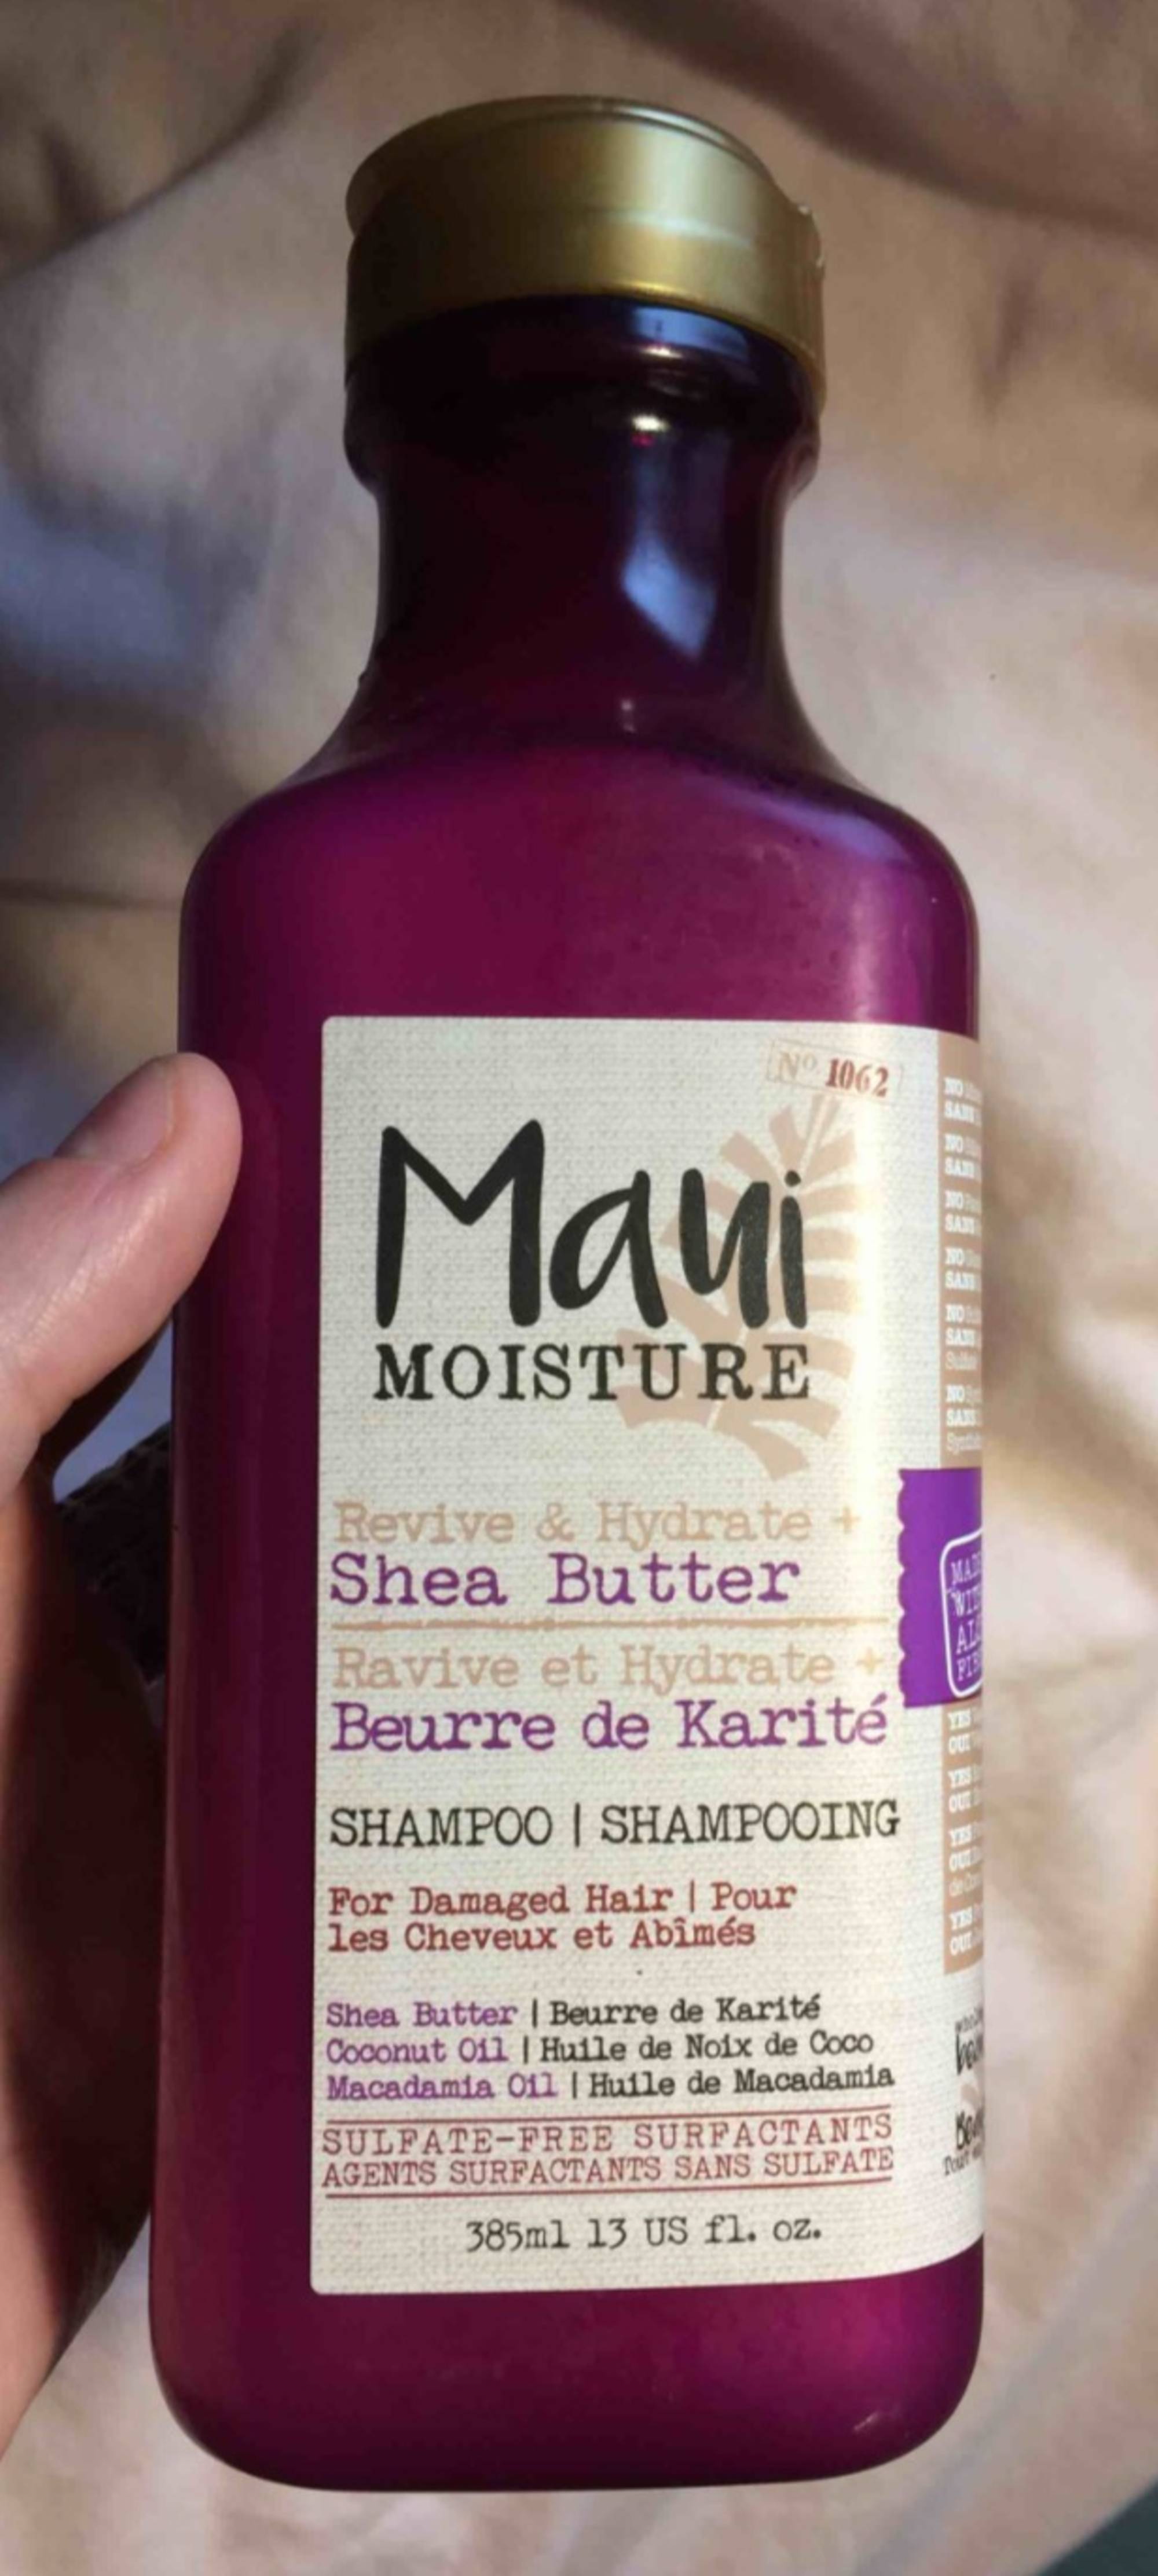 MANI MOISTURE - Revive & hydrate+ shea butter - Shampooing